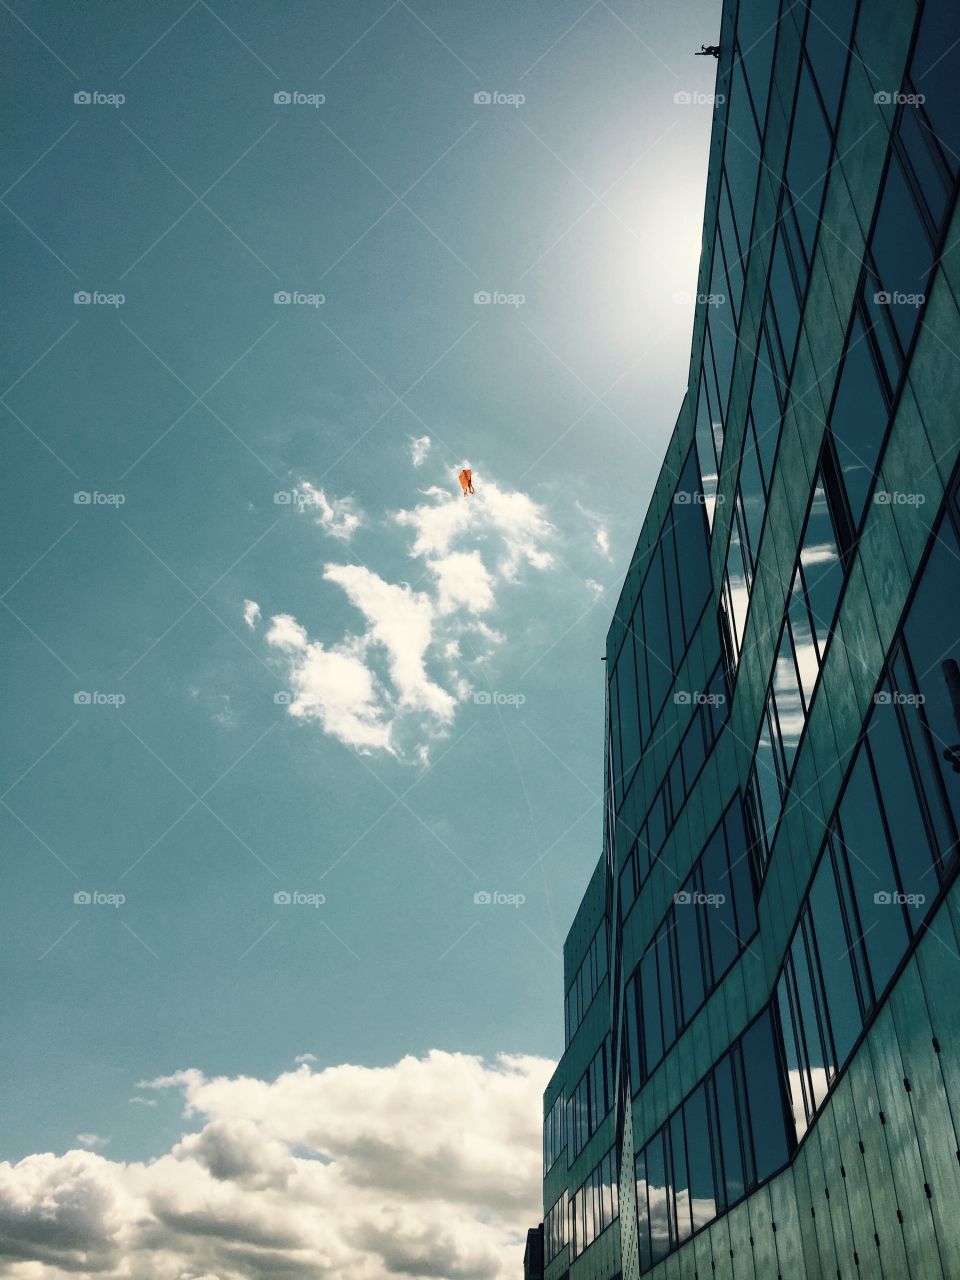 Kite. Flying kite